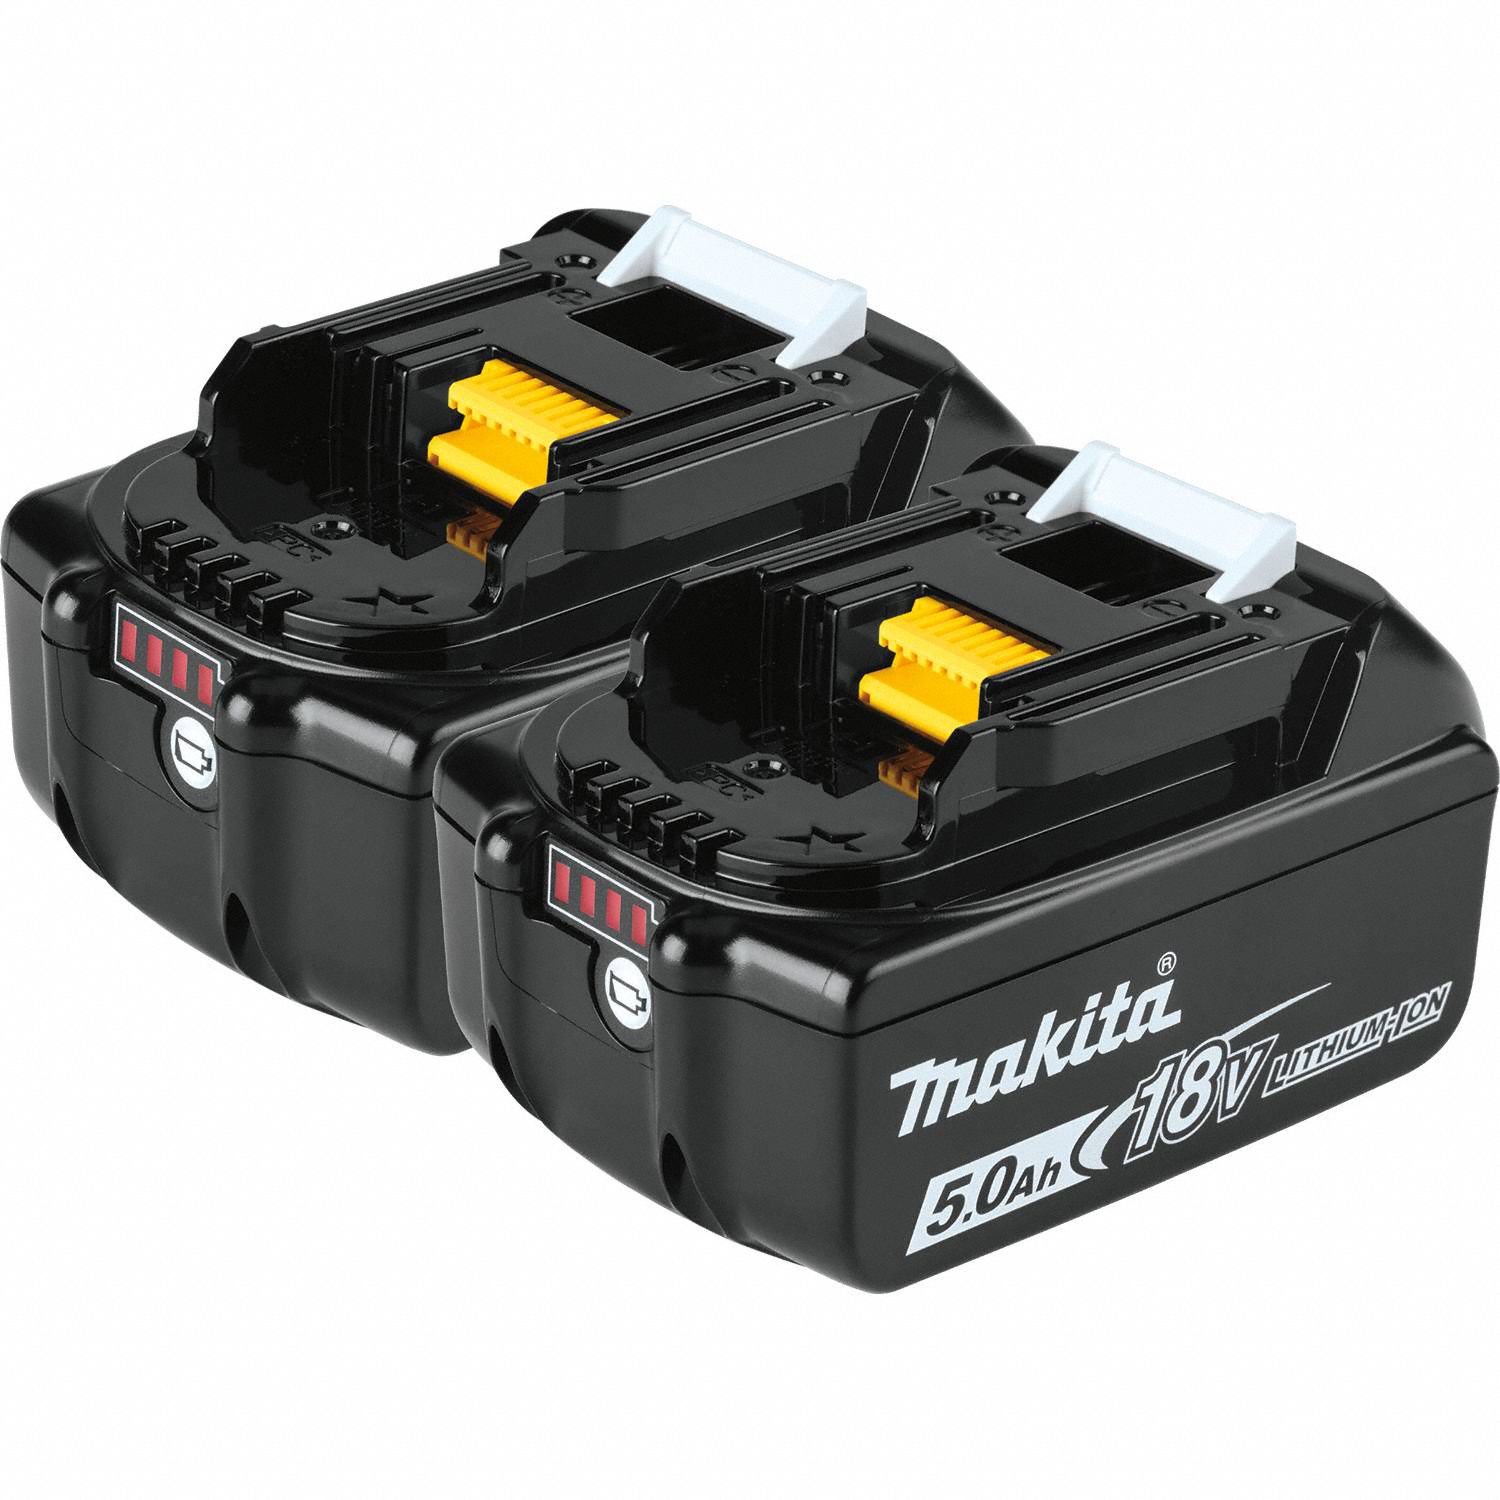 MAKITA Battery and Charger Kit: Makita, 18V LXT, Li-Ion, Charger .